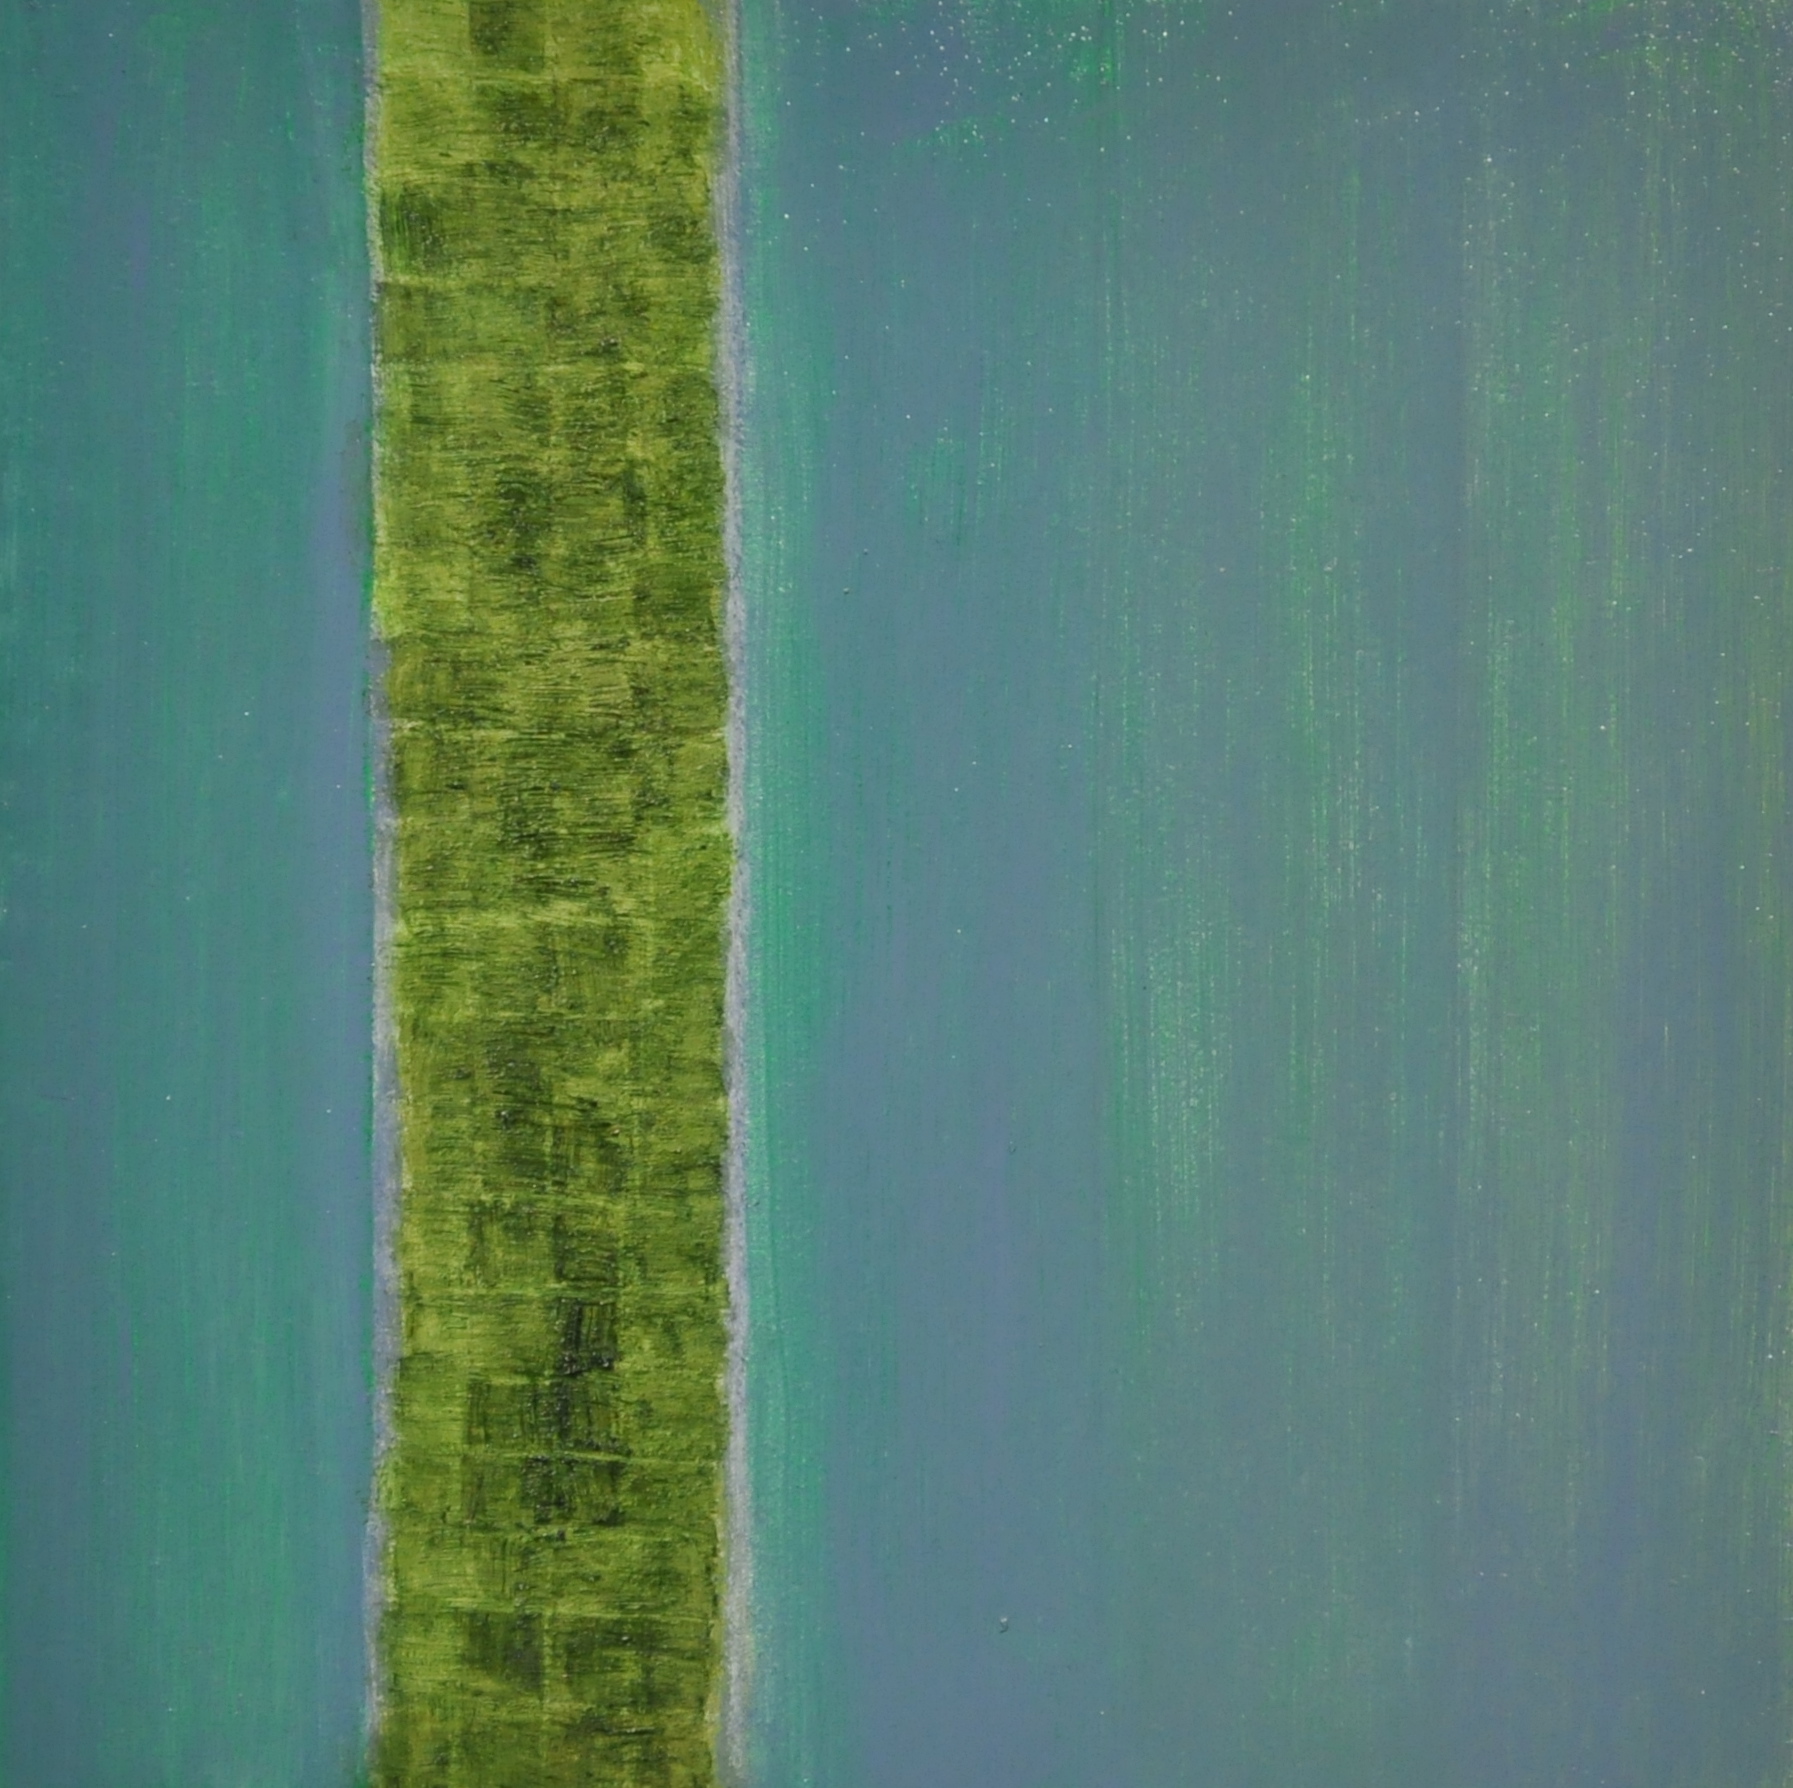  ribbon, 2016 oil on wood panel, 12.5 x 12.5 cm 